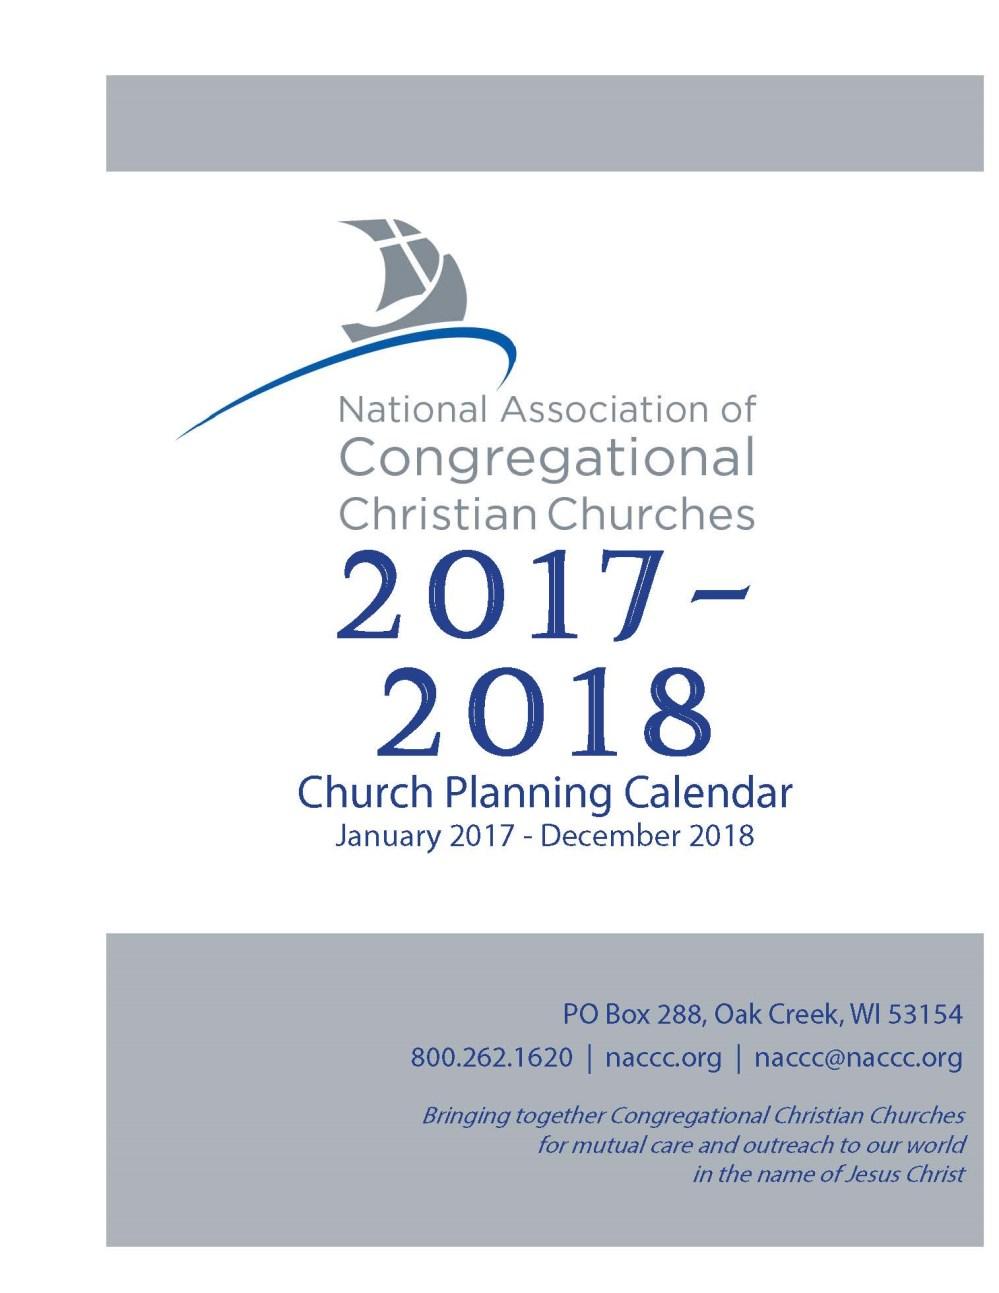 2017-2018 NACCC Planning Calendar Order Form Please send Two Year (2017-18) Calendars Price: $10.